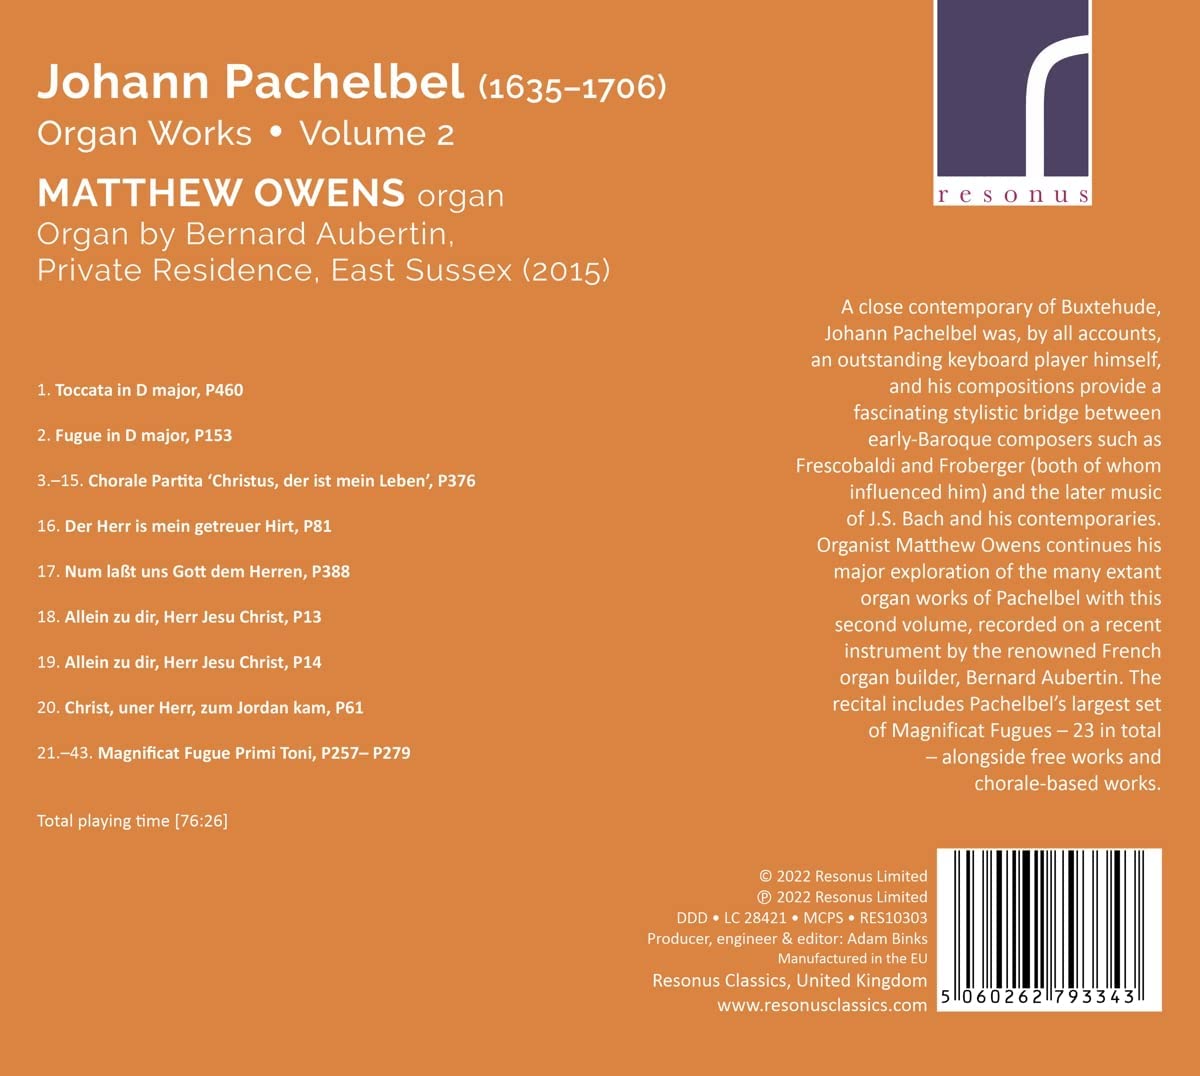 Matthew Owens 파헬벨: 오르간 작품 2집 (Pachelbel: Organ Works Vol. 2)